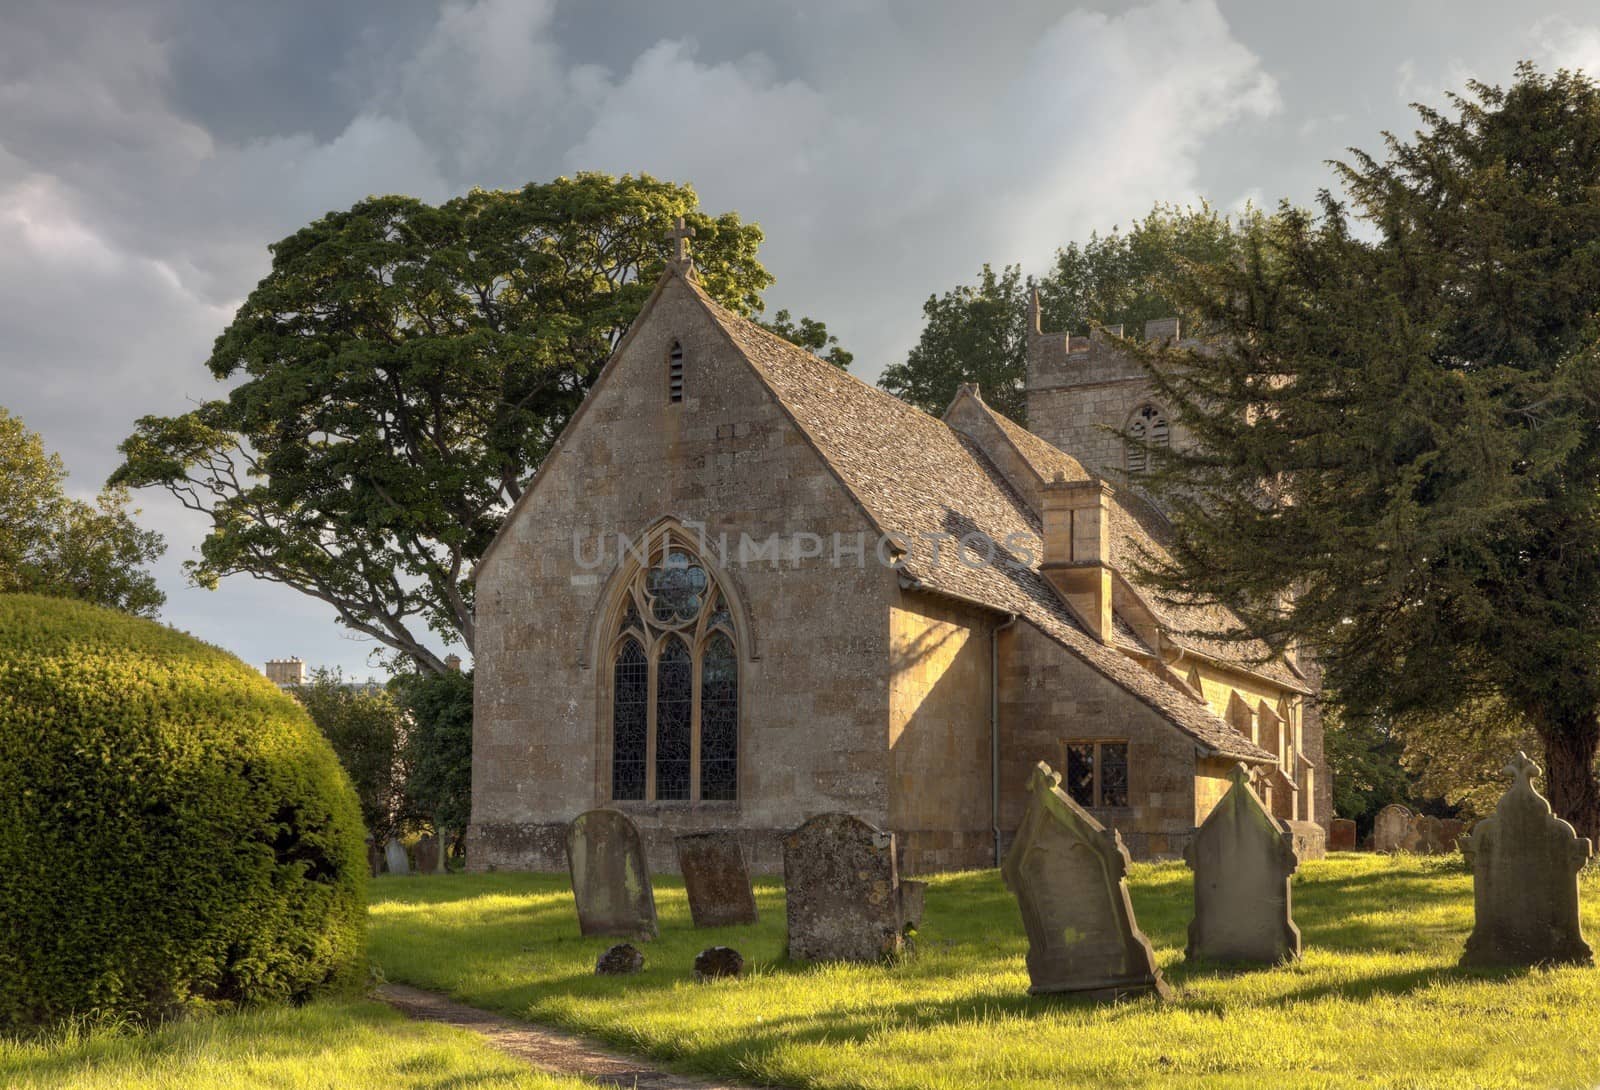 Pretty church at Ebrington near Chipping Campden, Gloucestershire, England.